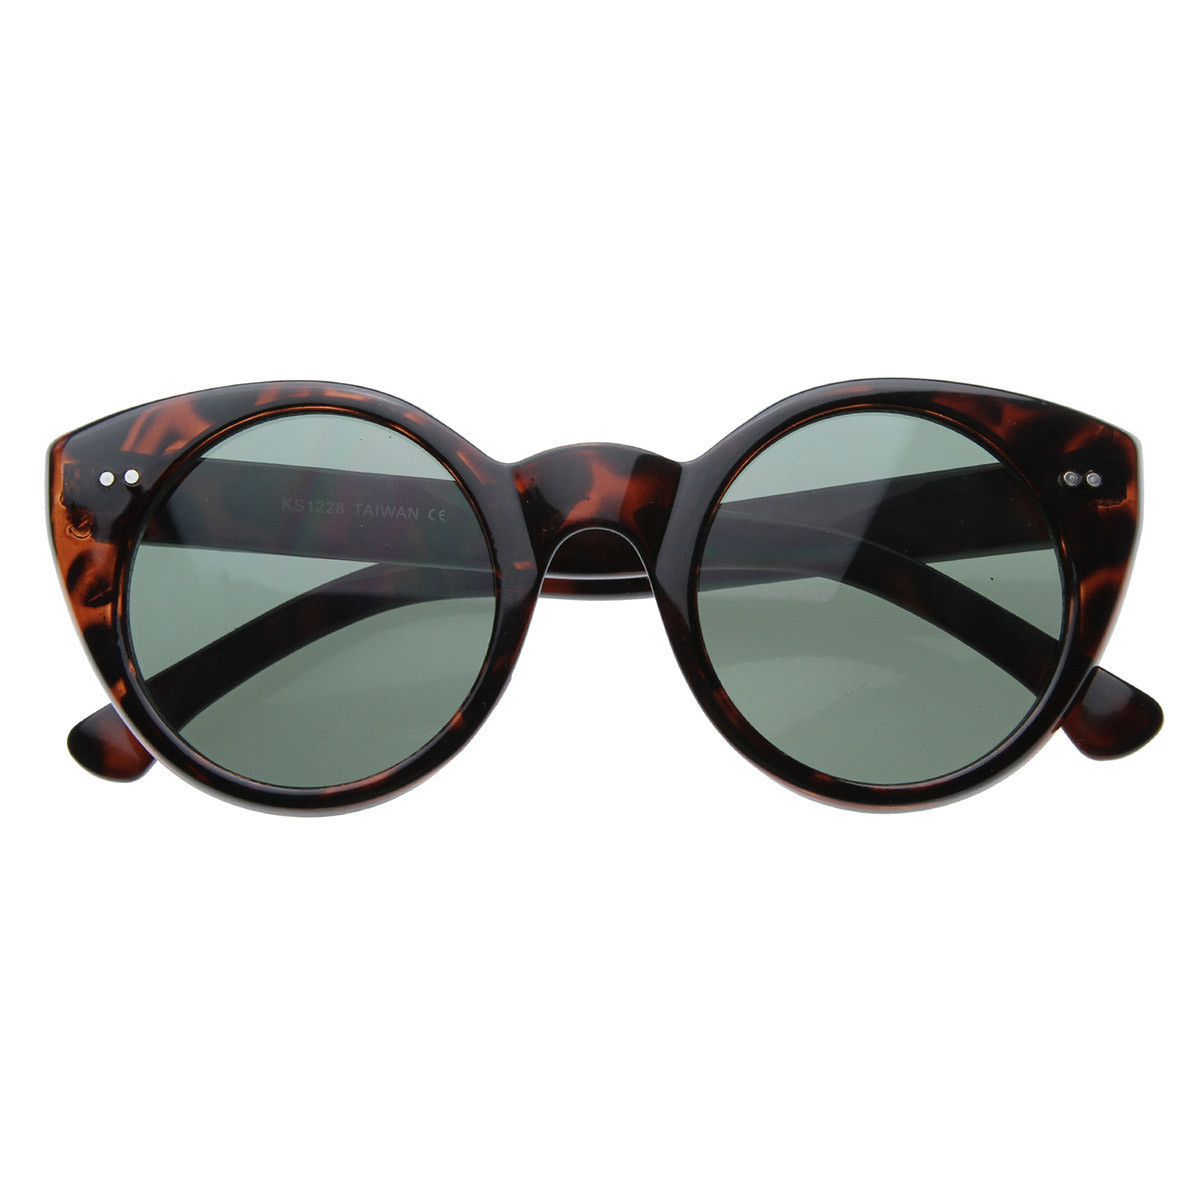 Modern Cateyes Vintage Inspired Circle Cat Eye Round Sunglasses W/ Metal Rivets - 8297 - Black